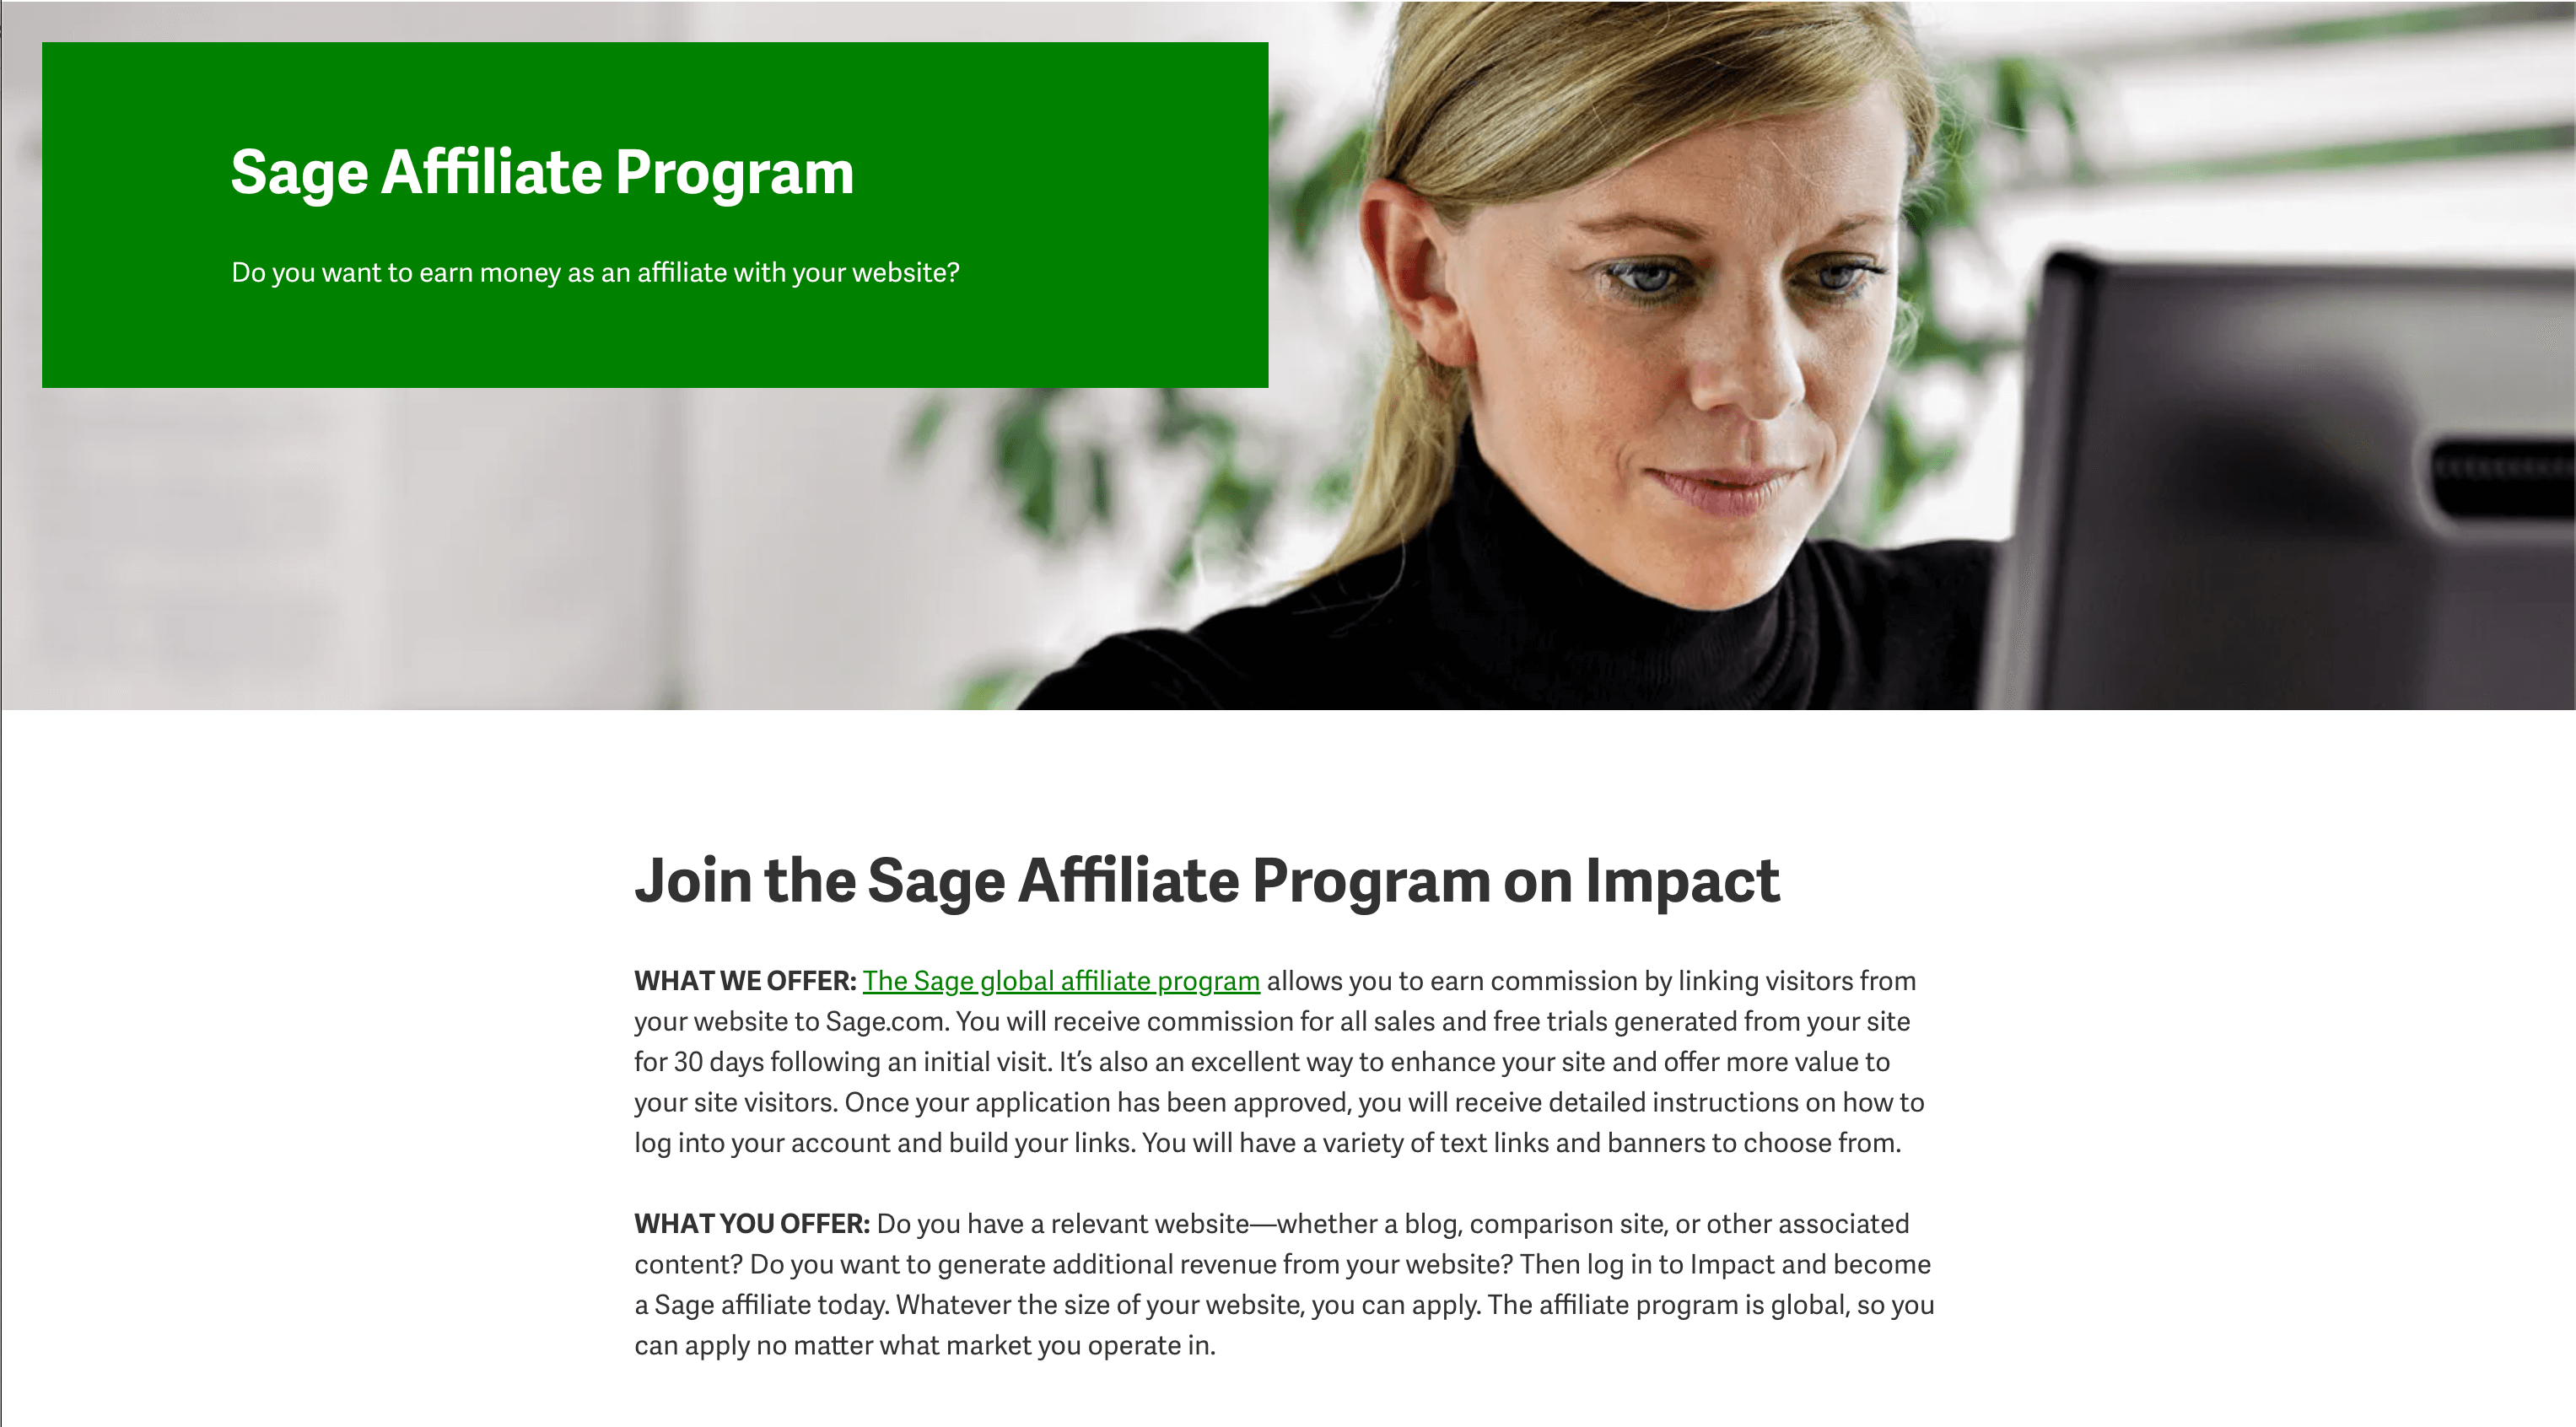 Sage affiliate program's homepage